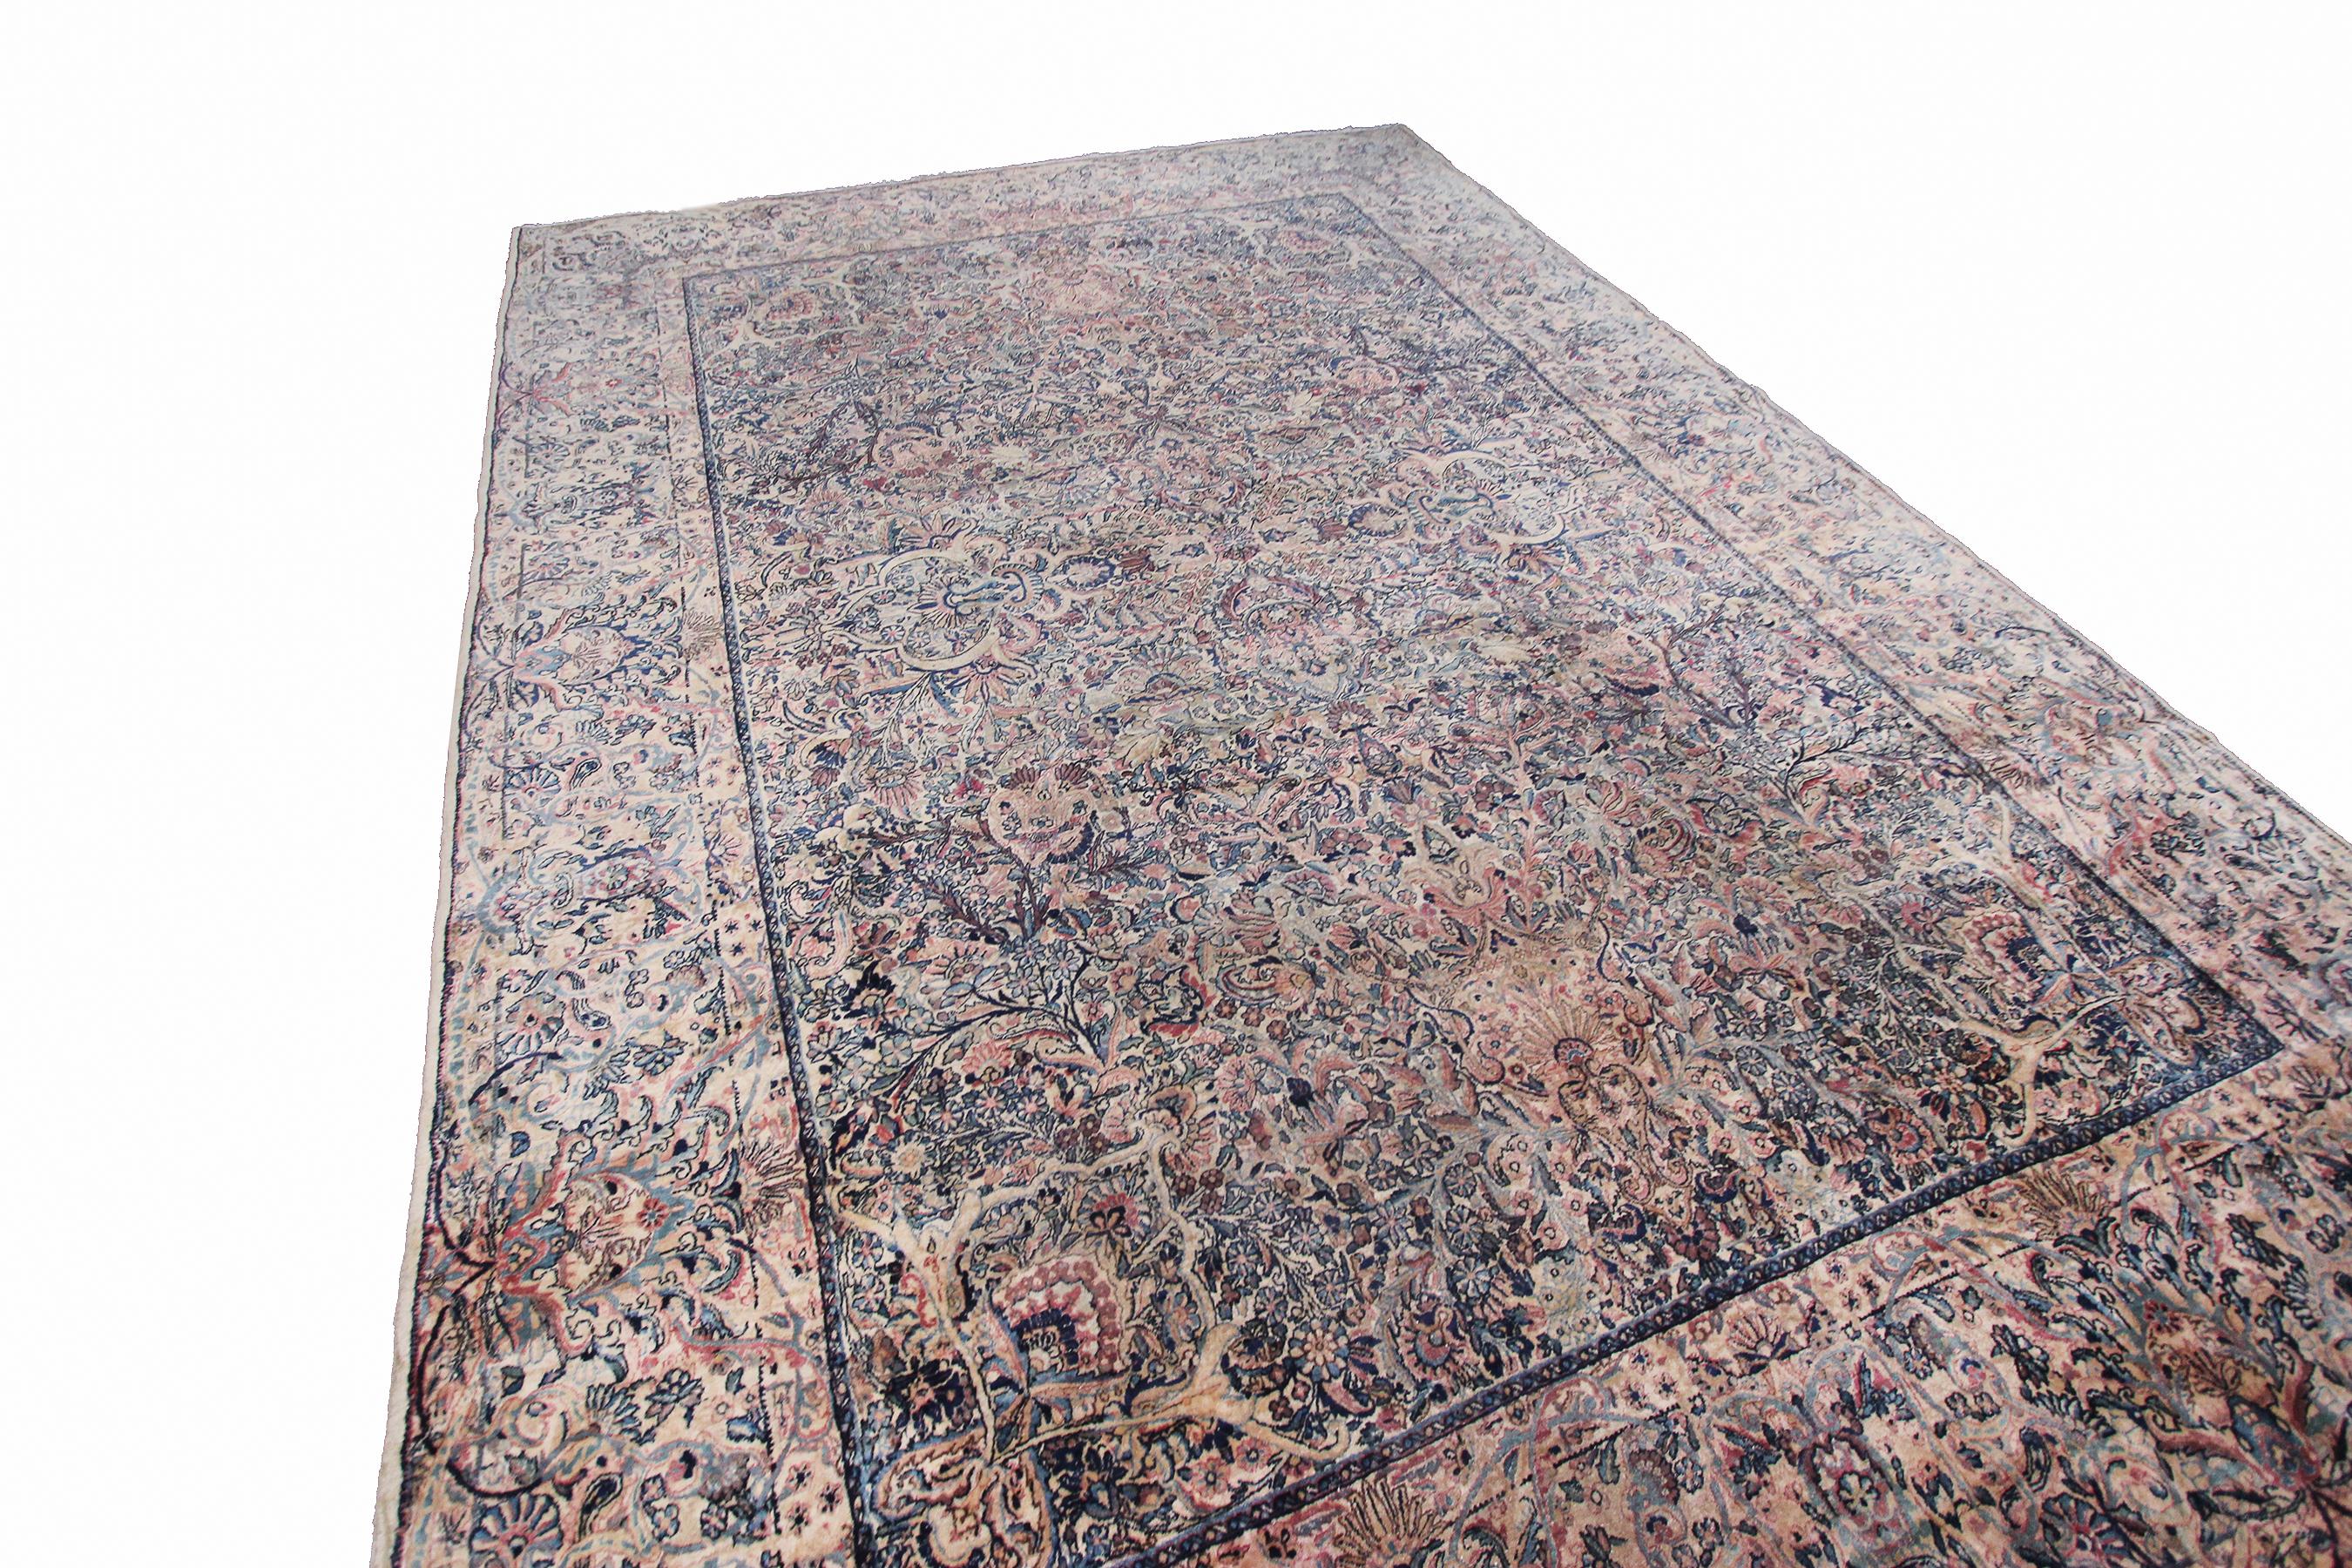 Antique Lavar rug handmade oriental rug fine.
Measures: 9'10